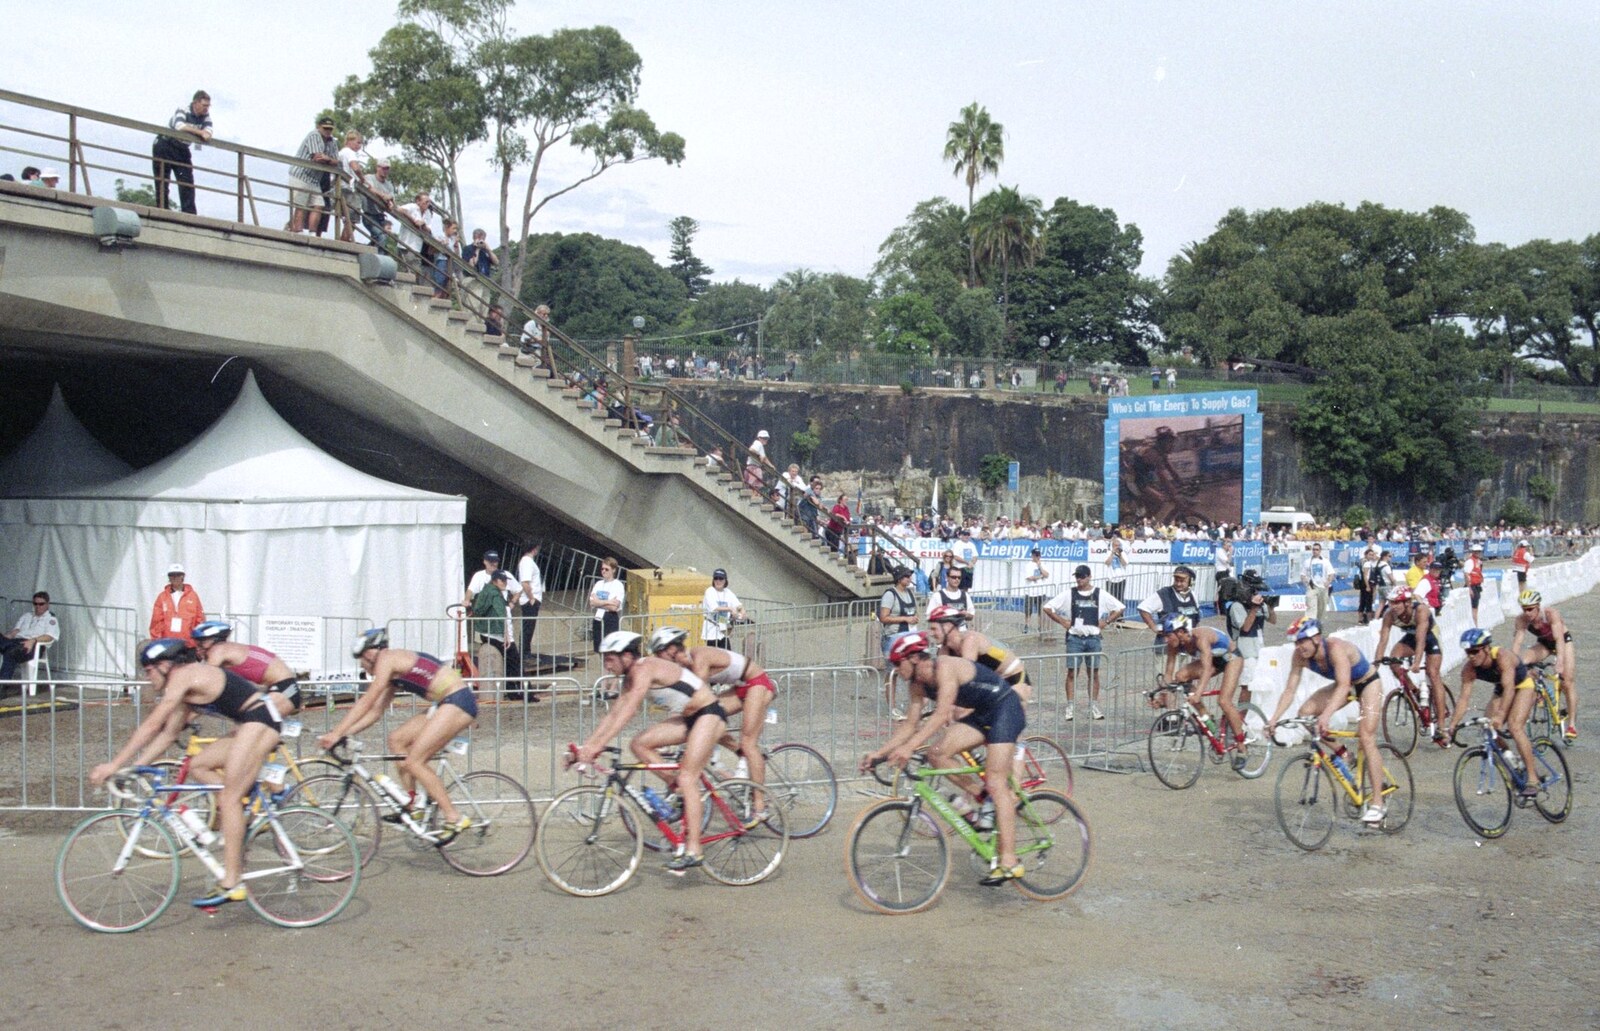 Cyclists stream past from Sydney Triathlon, Sydney, Australia - 16th April 2000